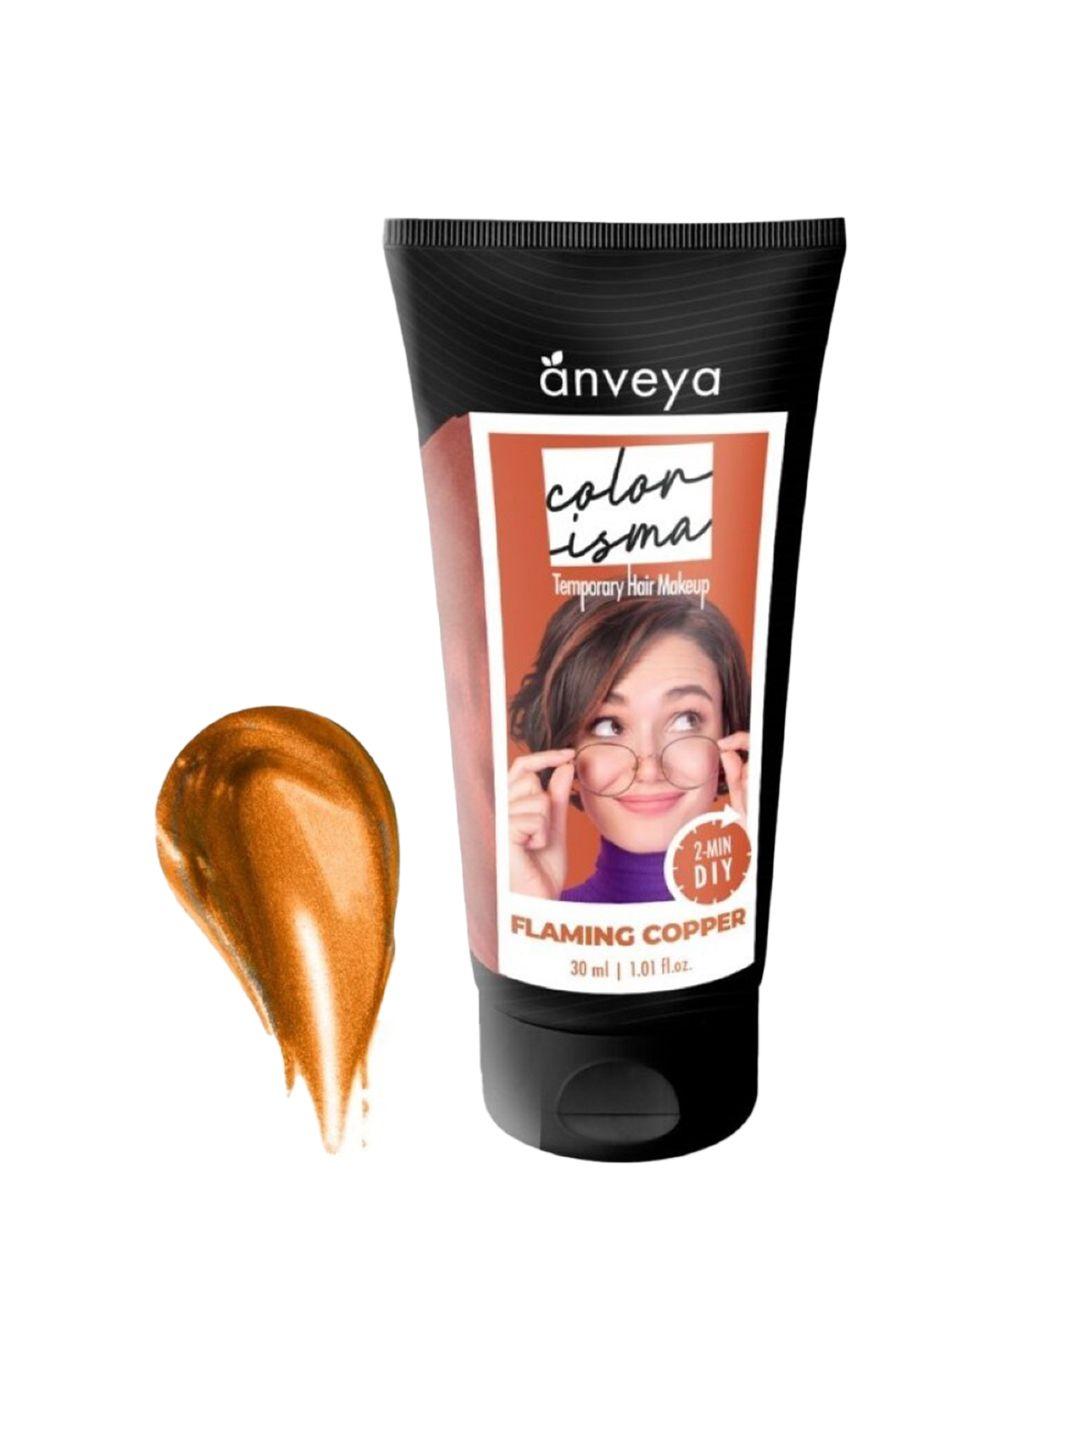 anveya colorisma temporary hair color 30ml - flaming copper